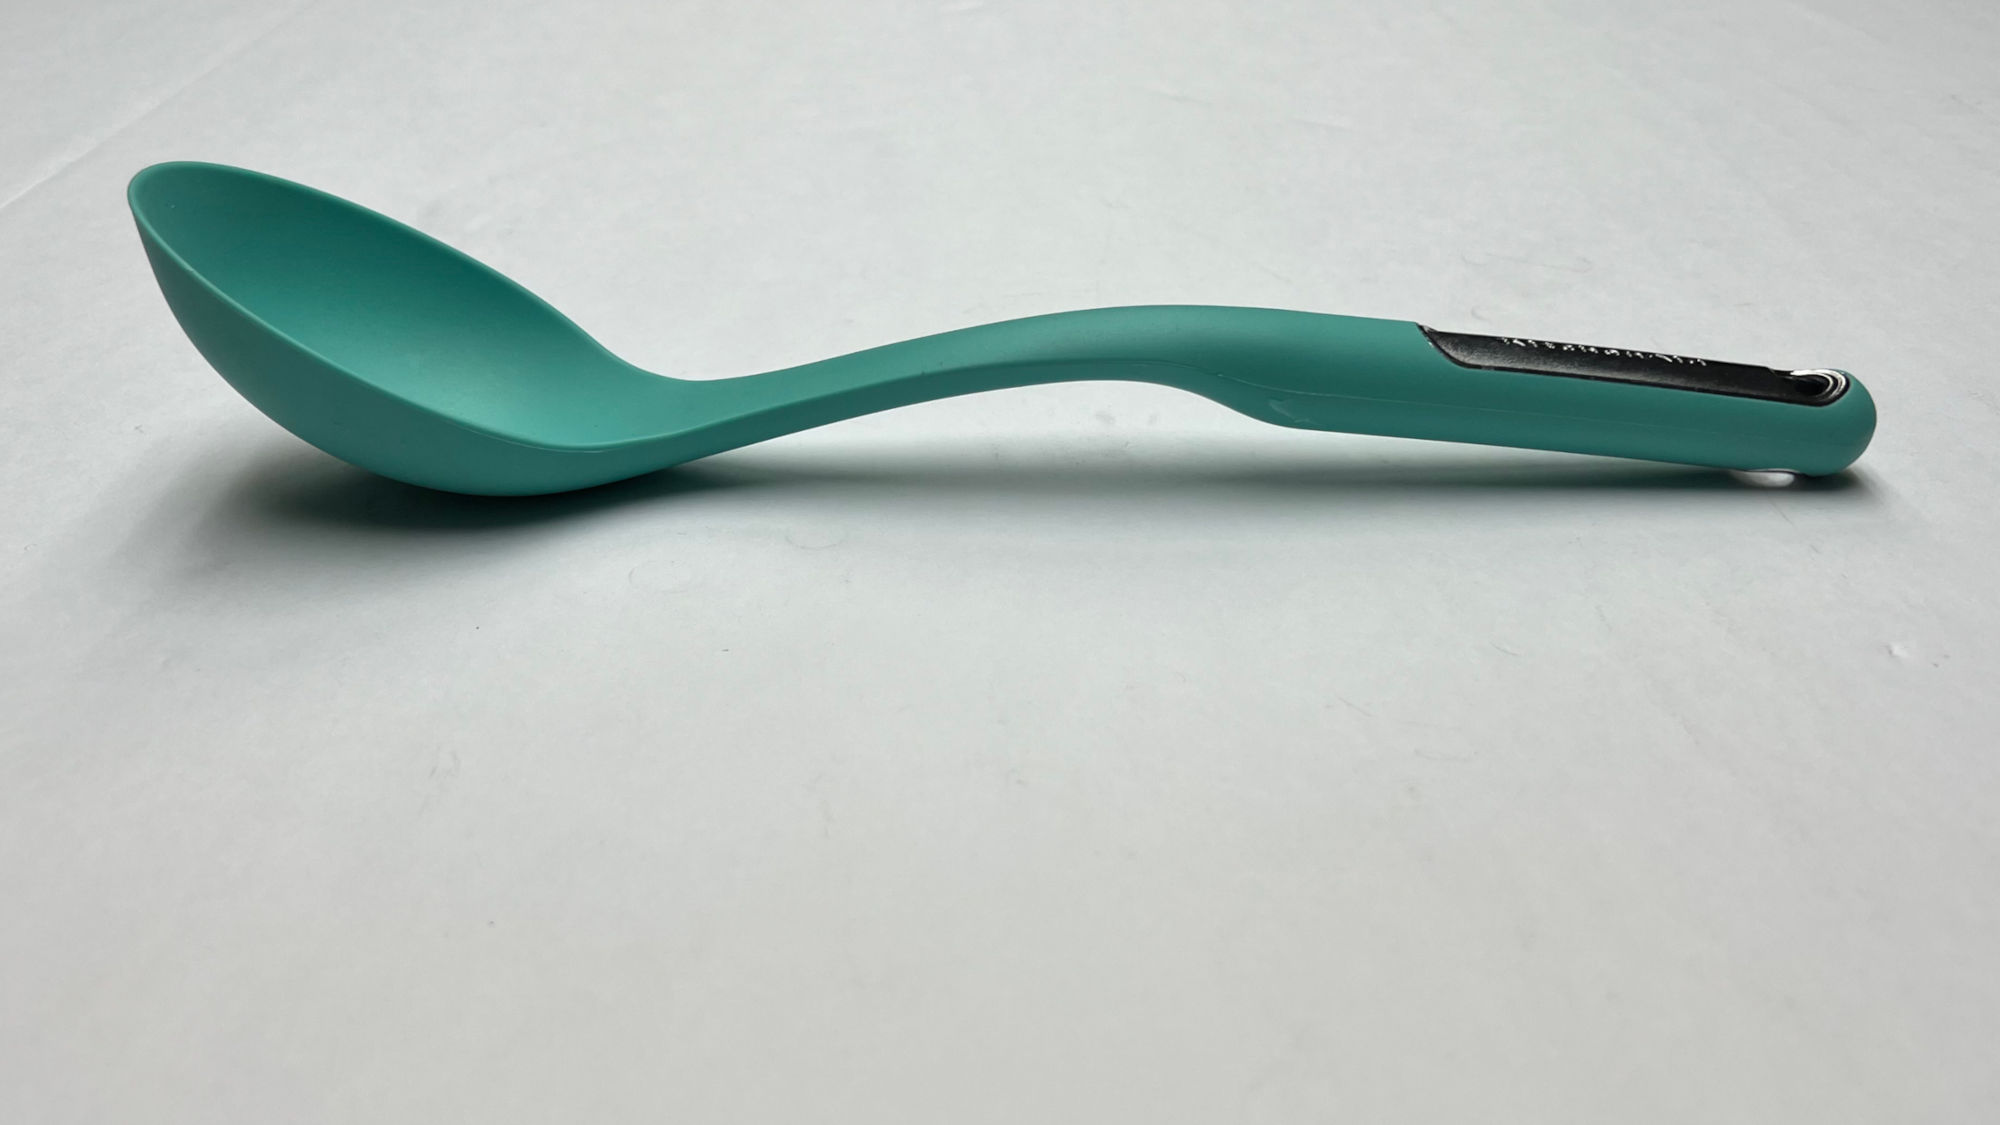 Silicone Basting Spoon